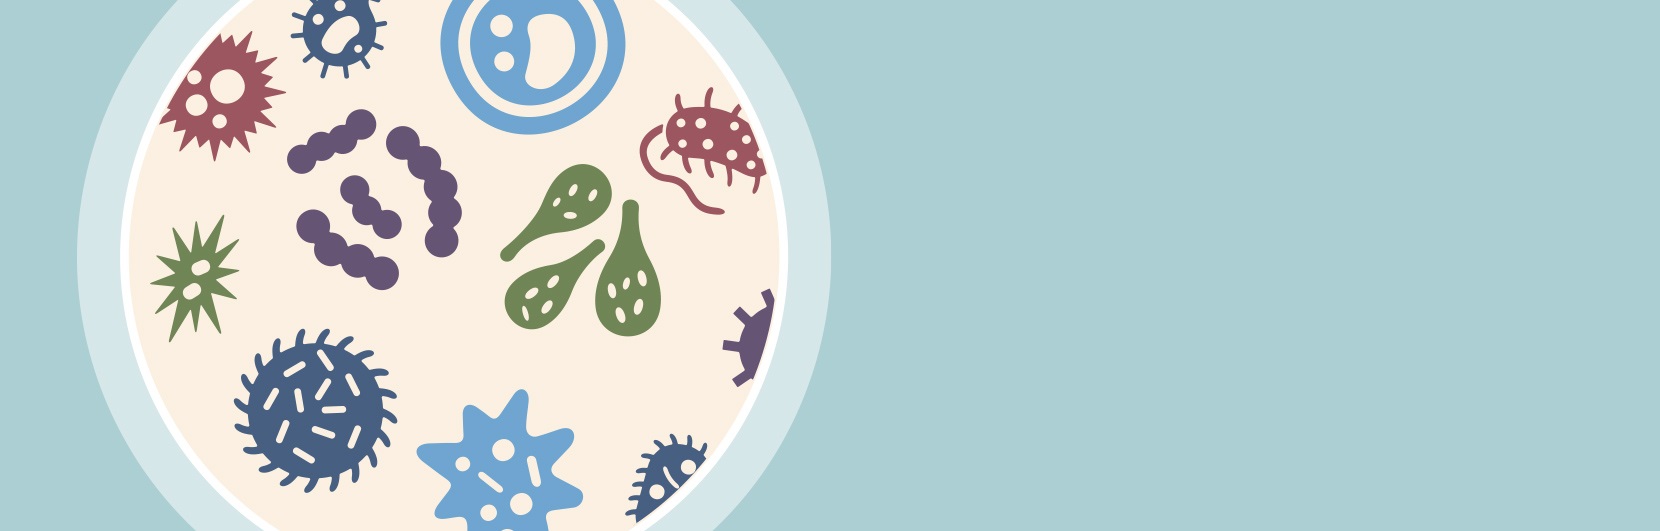 Illustration d’un microbiome sain